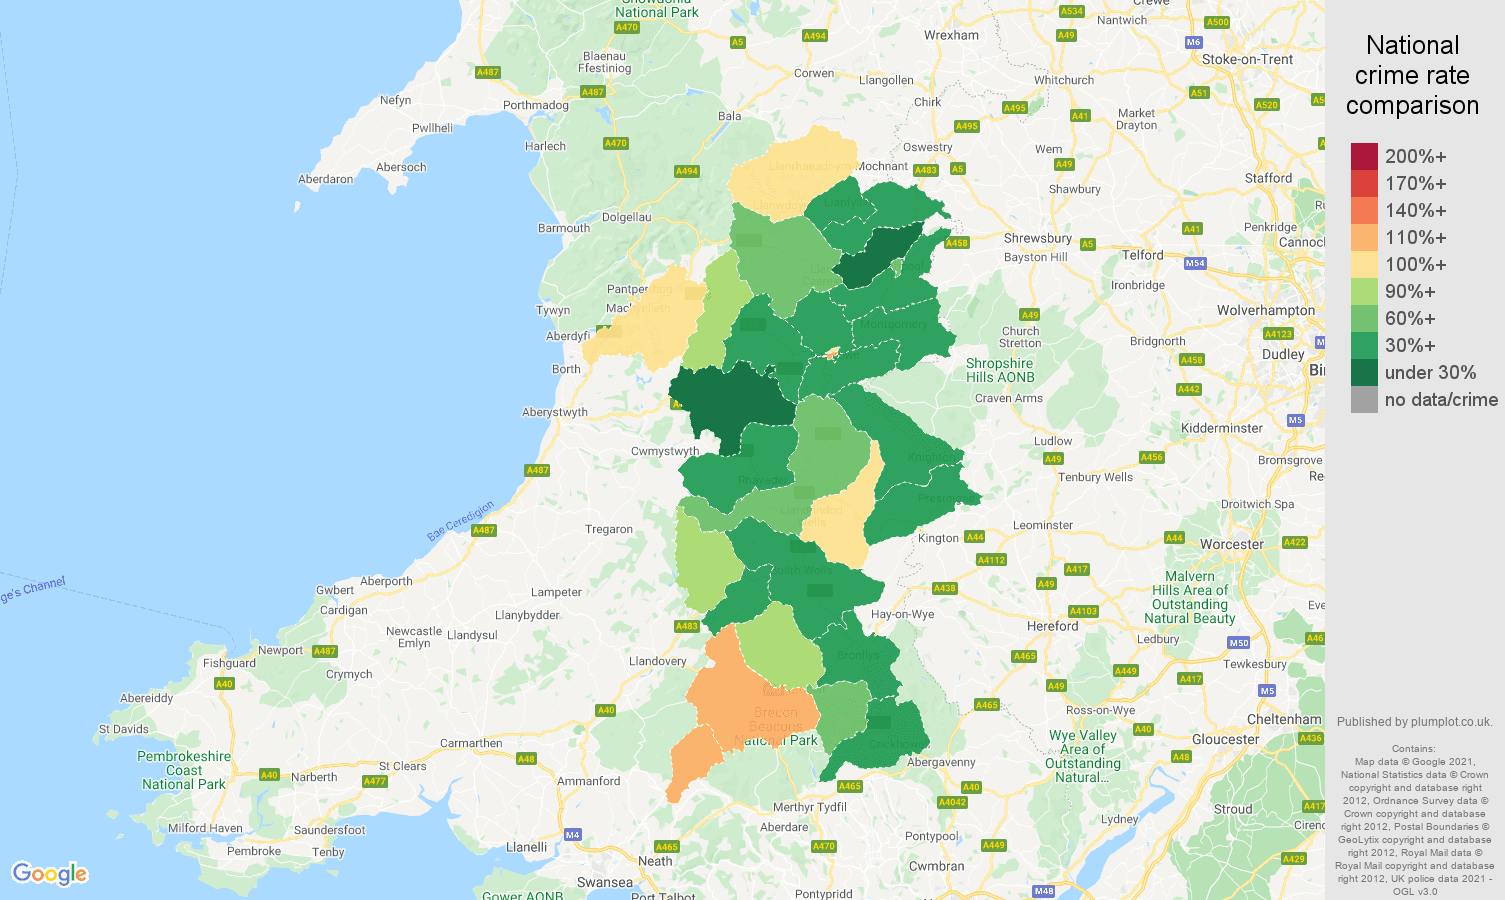 Powys criminal damage and arson crime rate comparison map